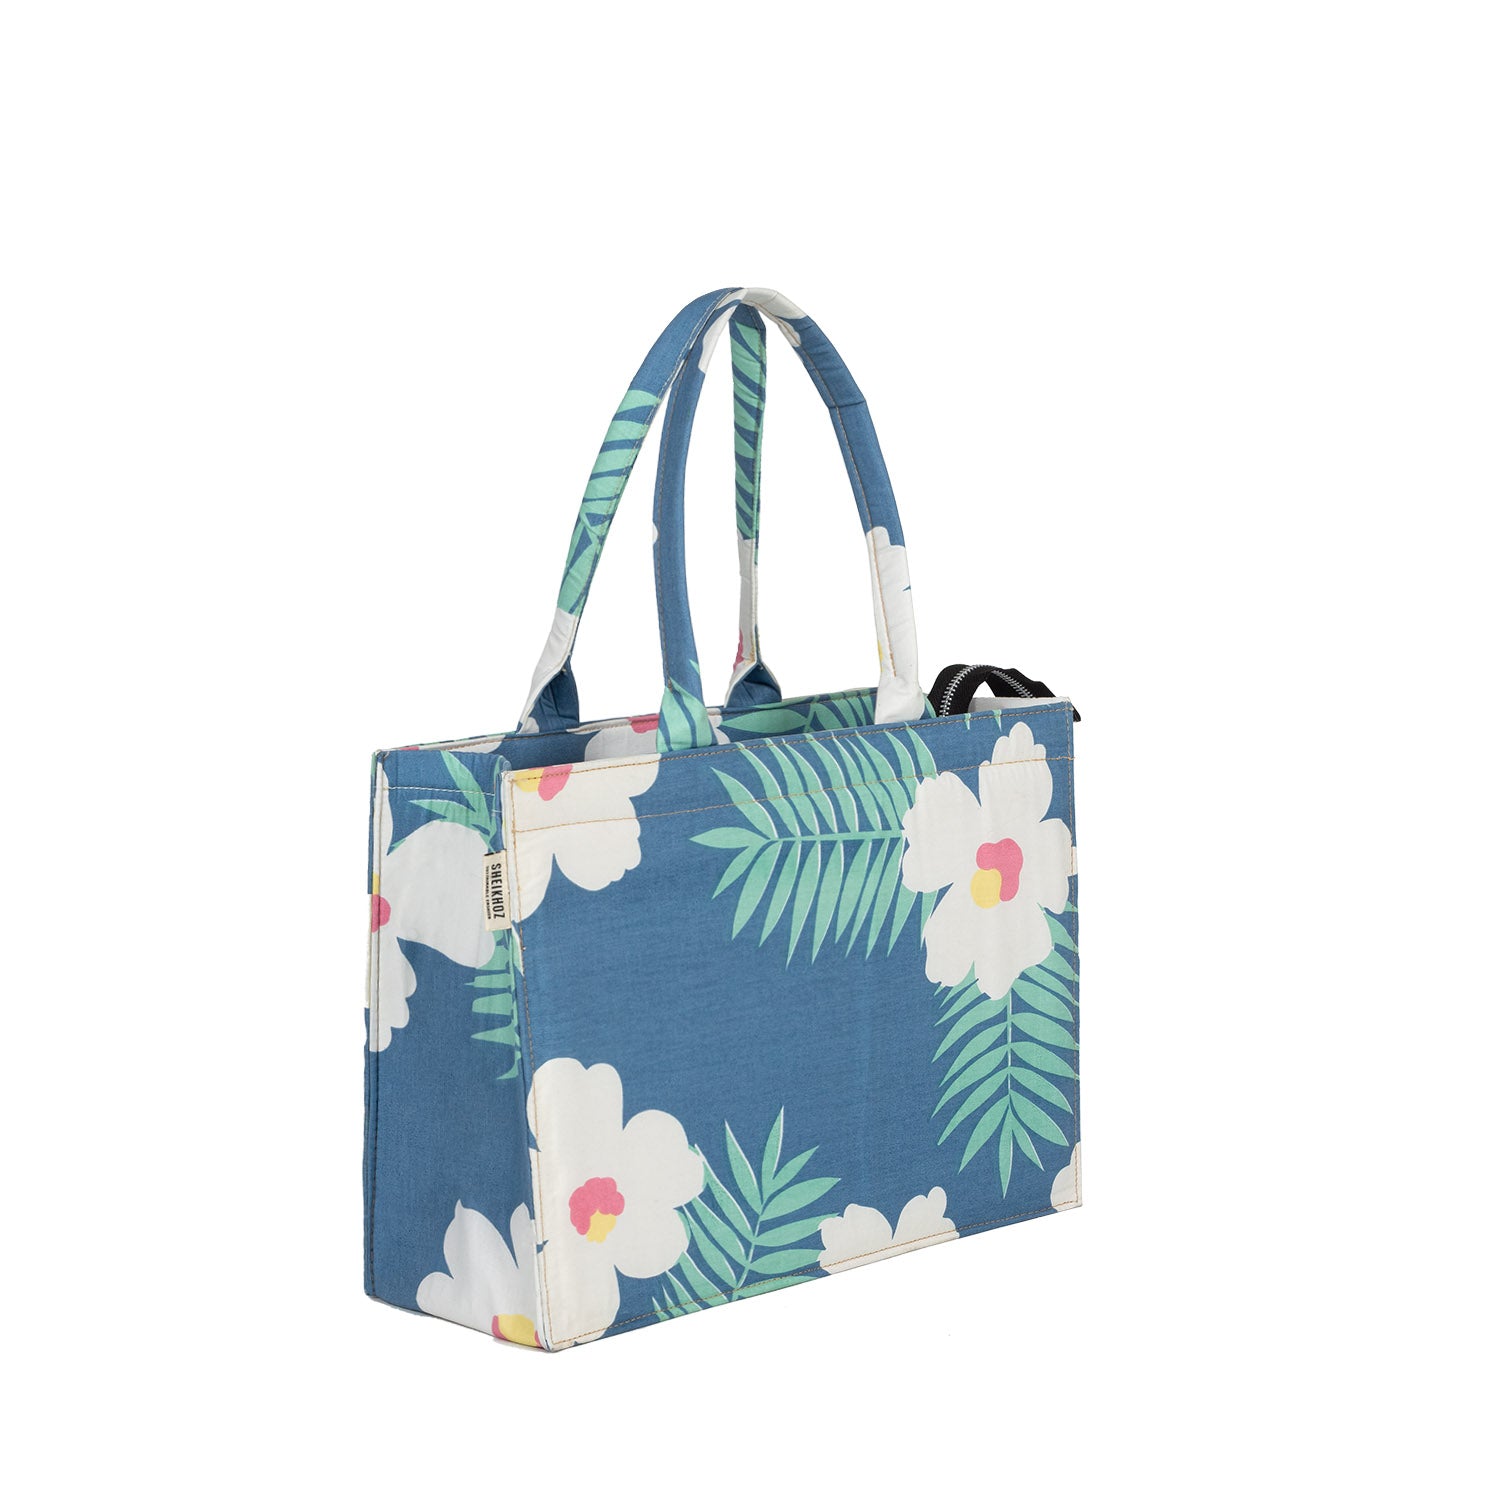 Medium Mimi - Light Blue Floral Printed Tote Bag